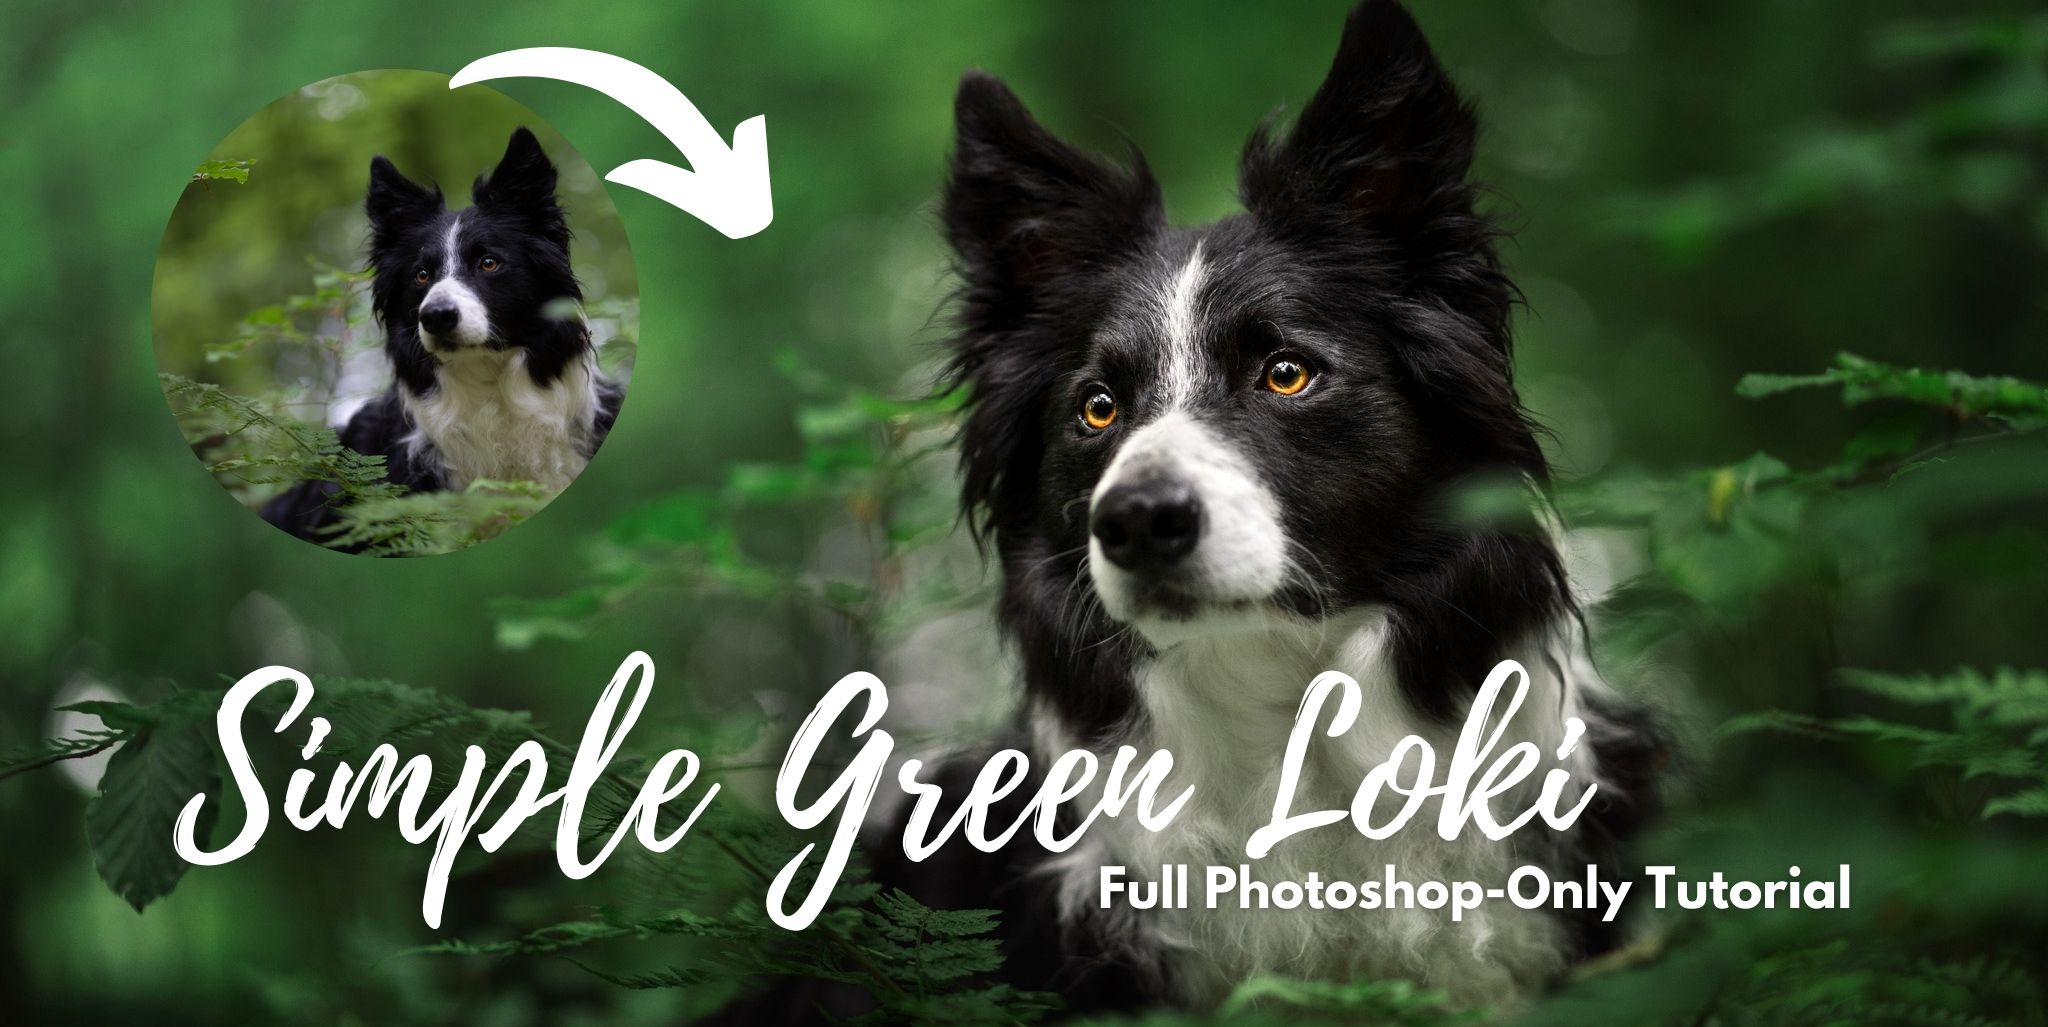 Simple Green Loki: Full Photoshop-Only Tutorial